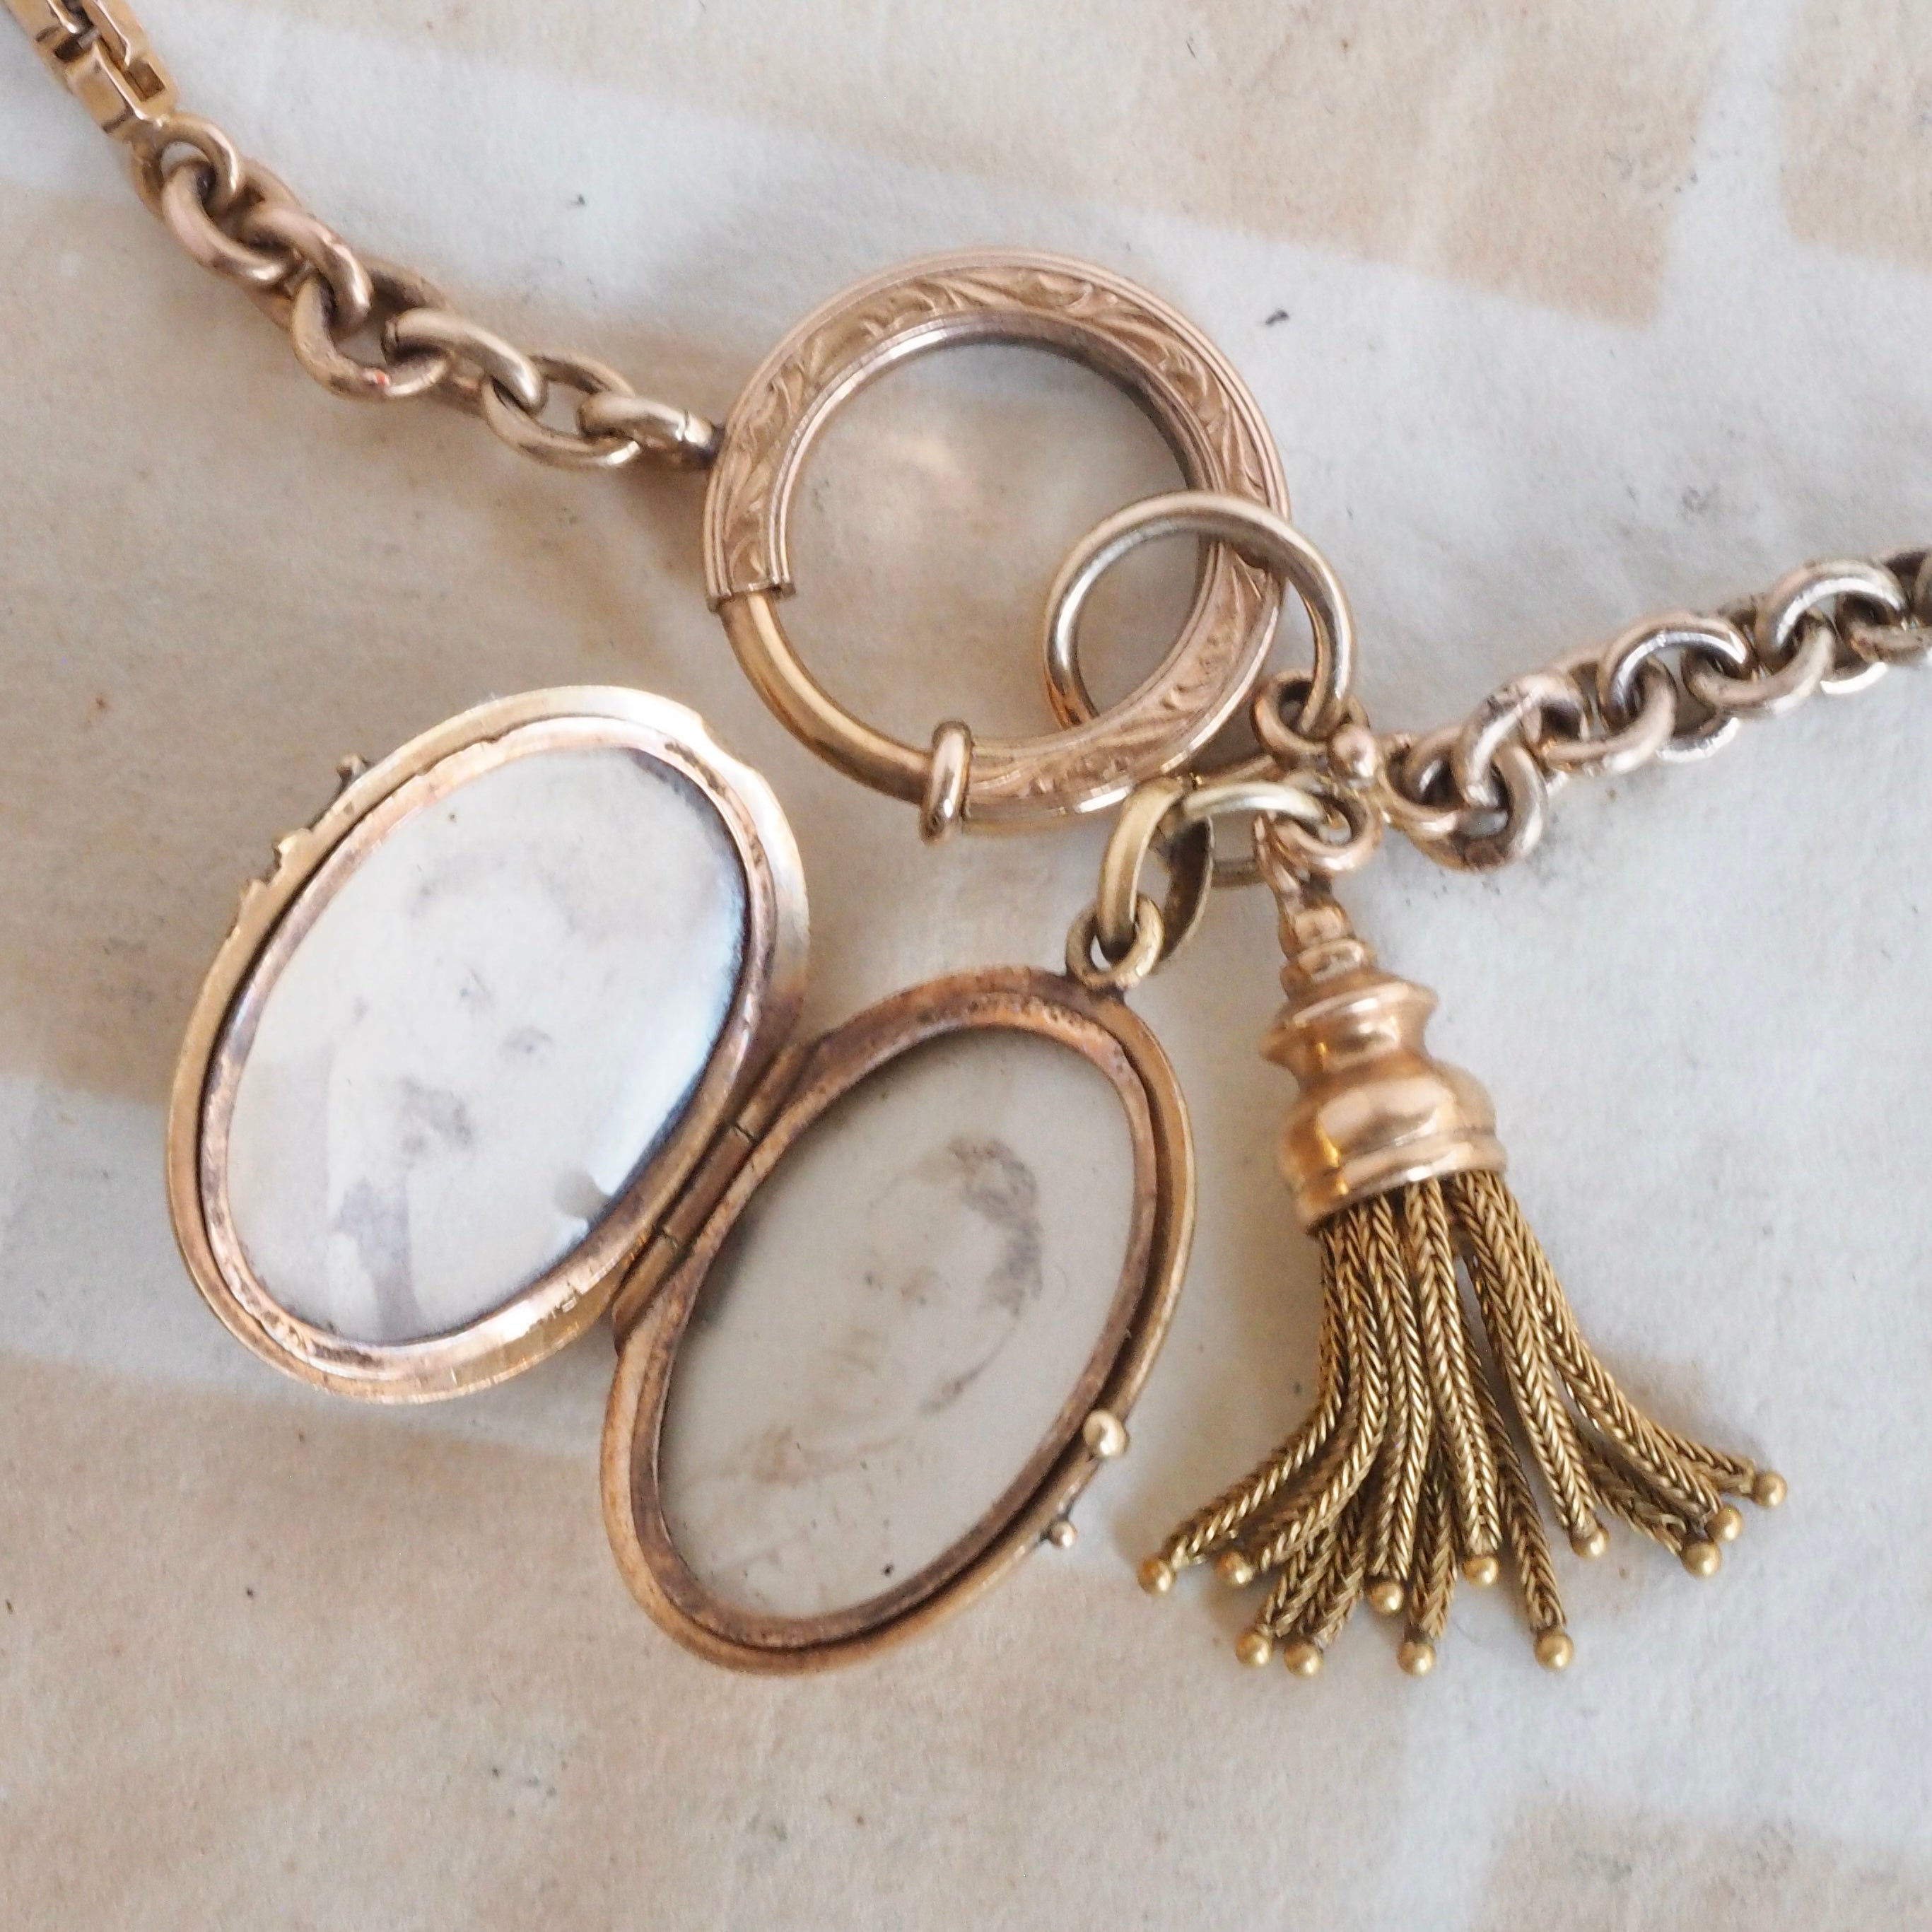 Antique Locket Watch Necklace Stock Photo 654405841 | Shutterstock